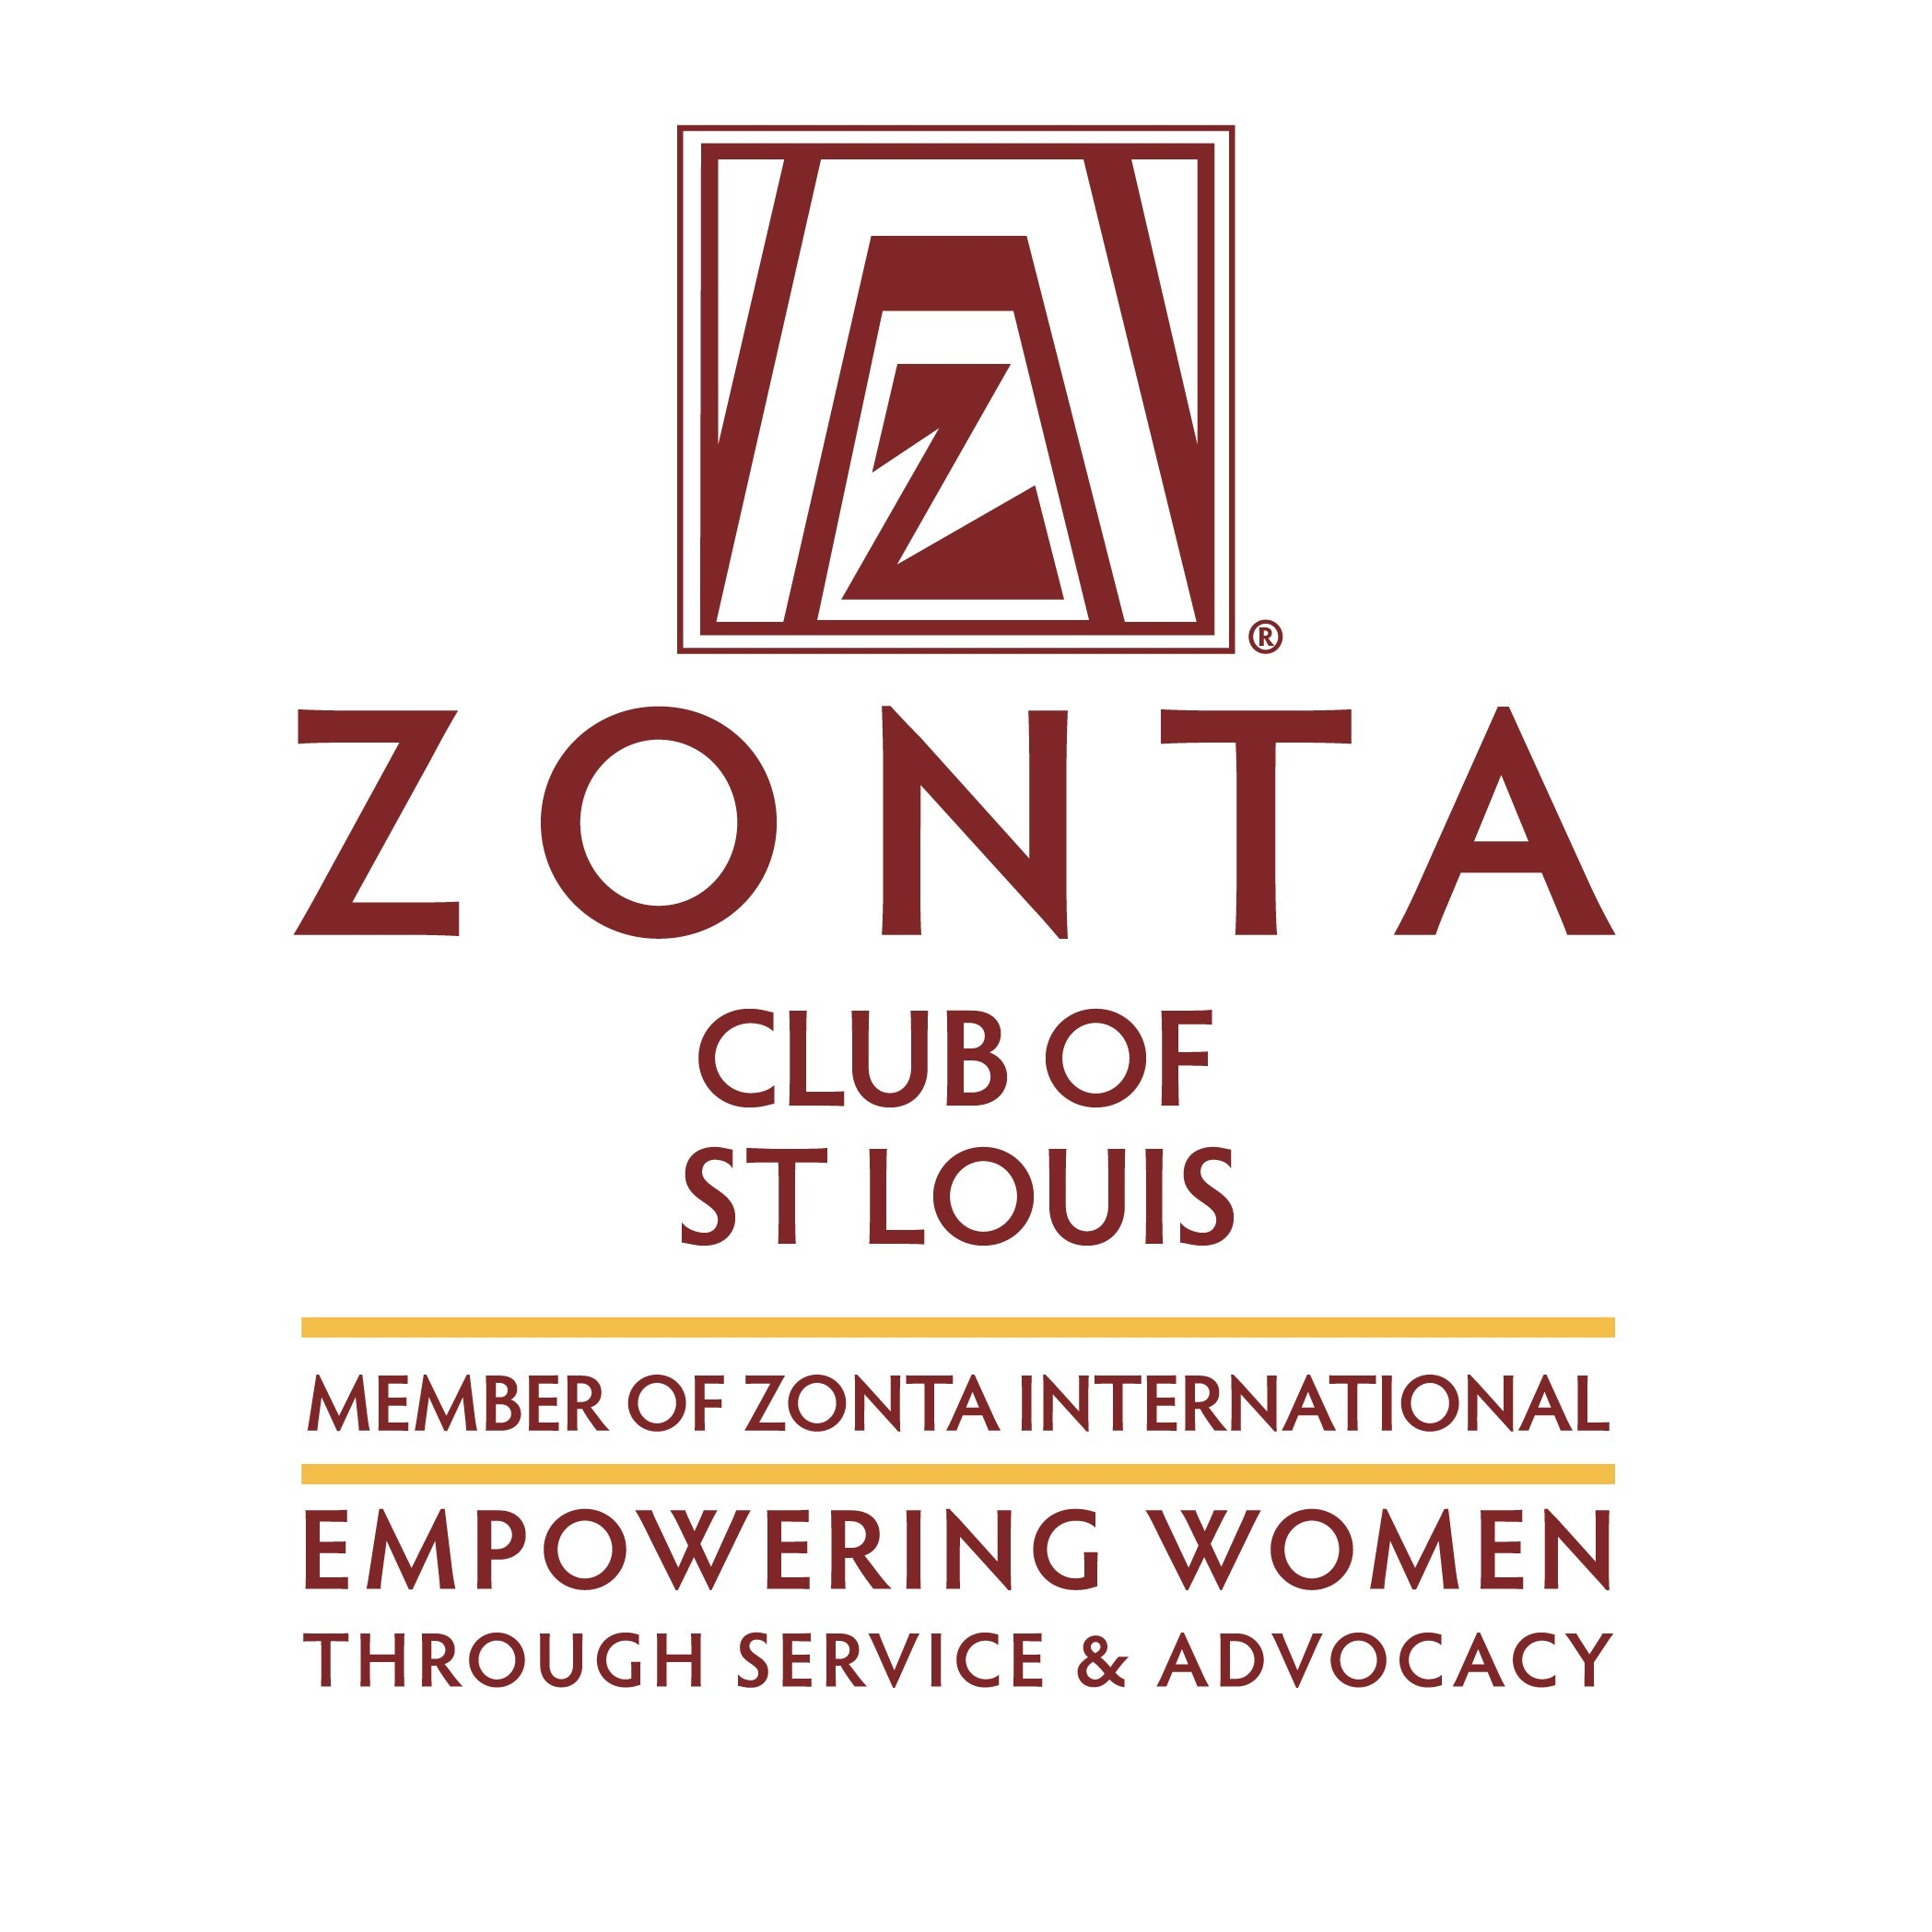 Zonta Club of St. Louis